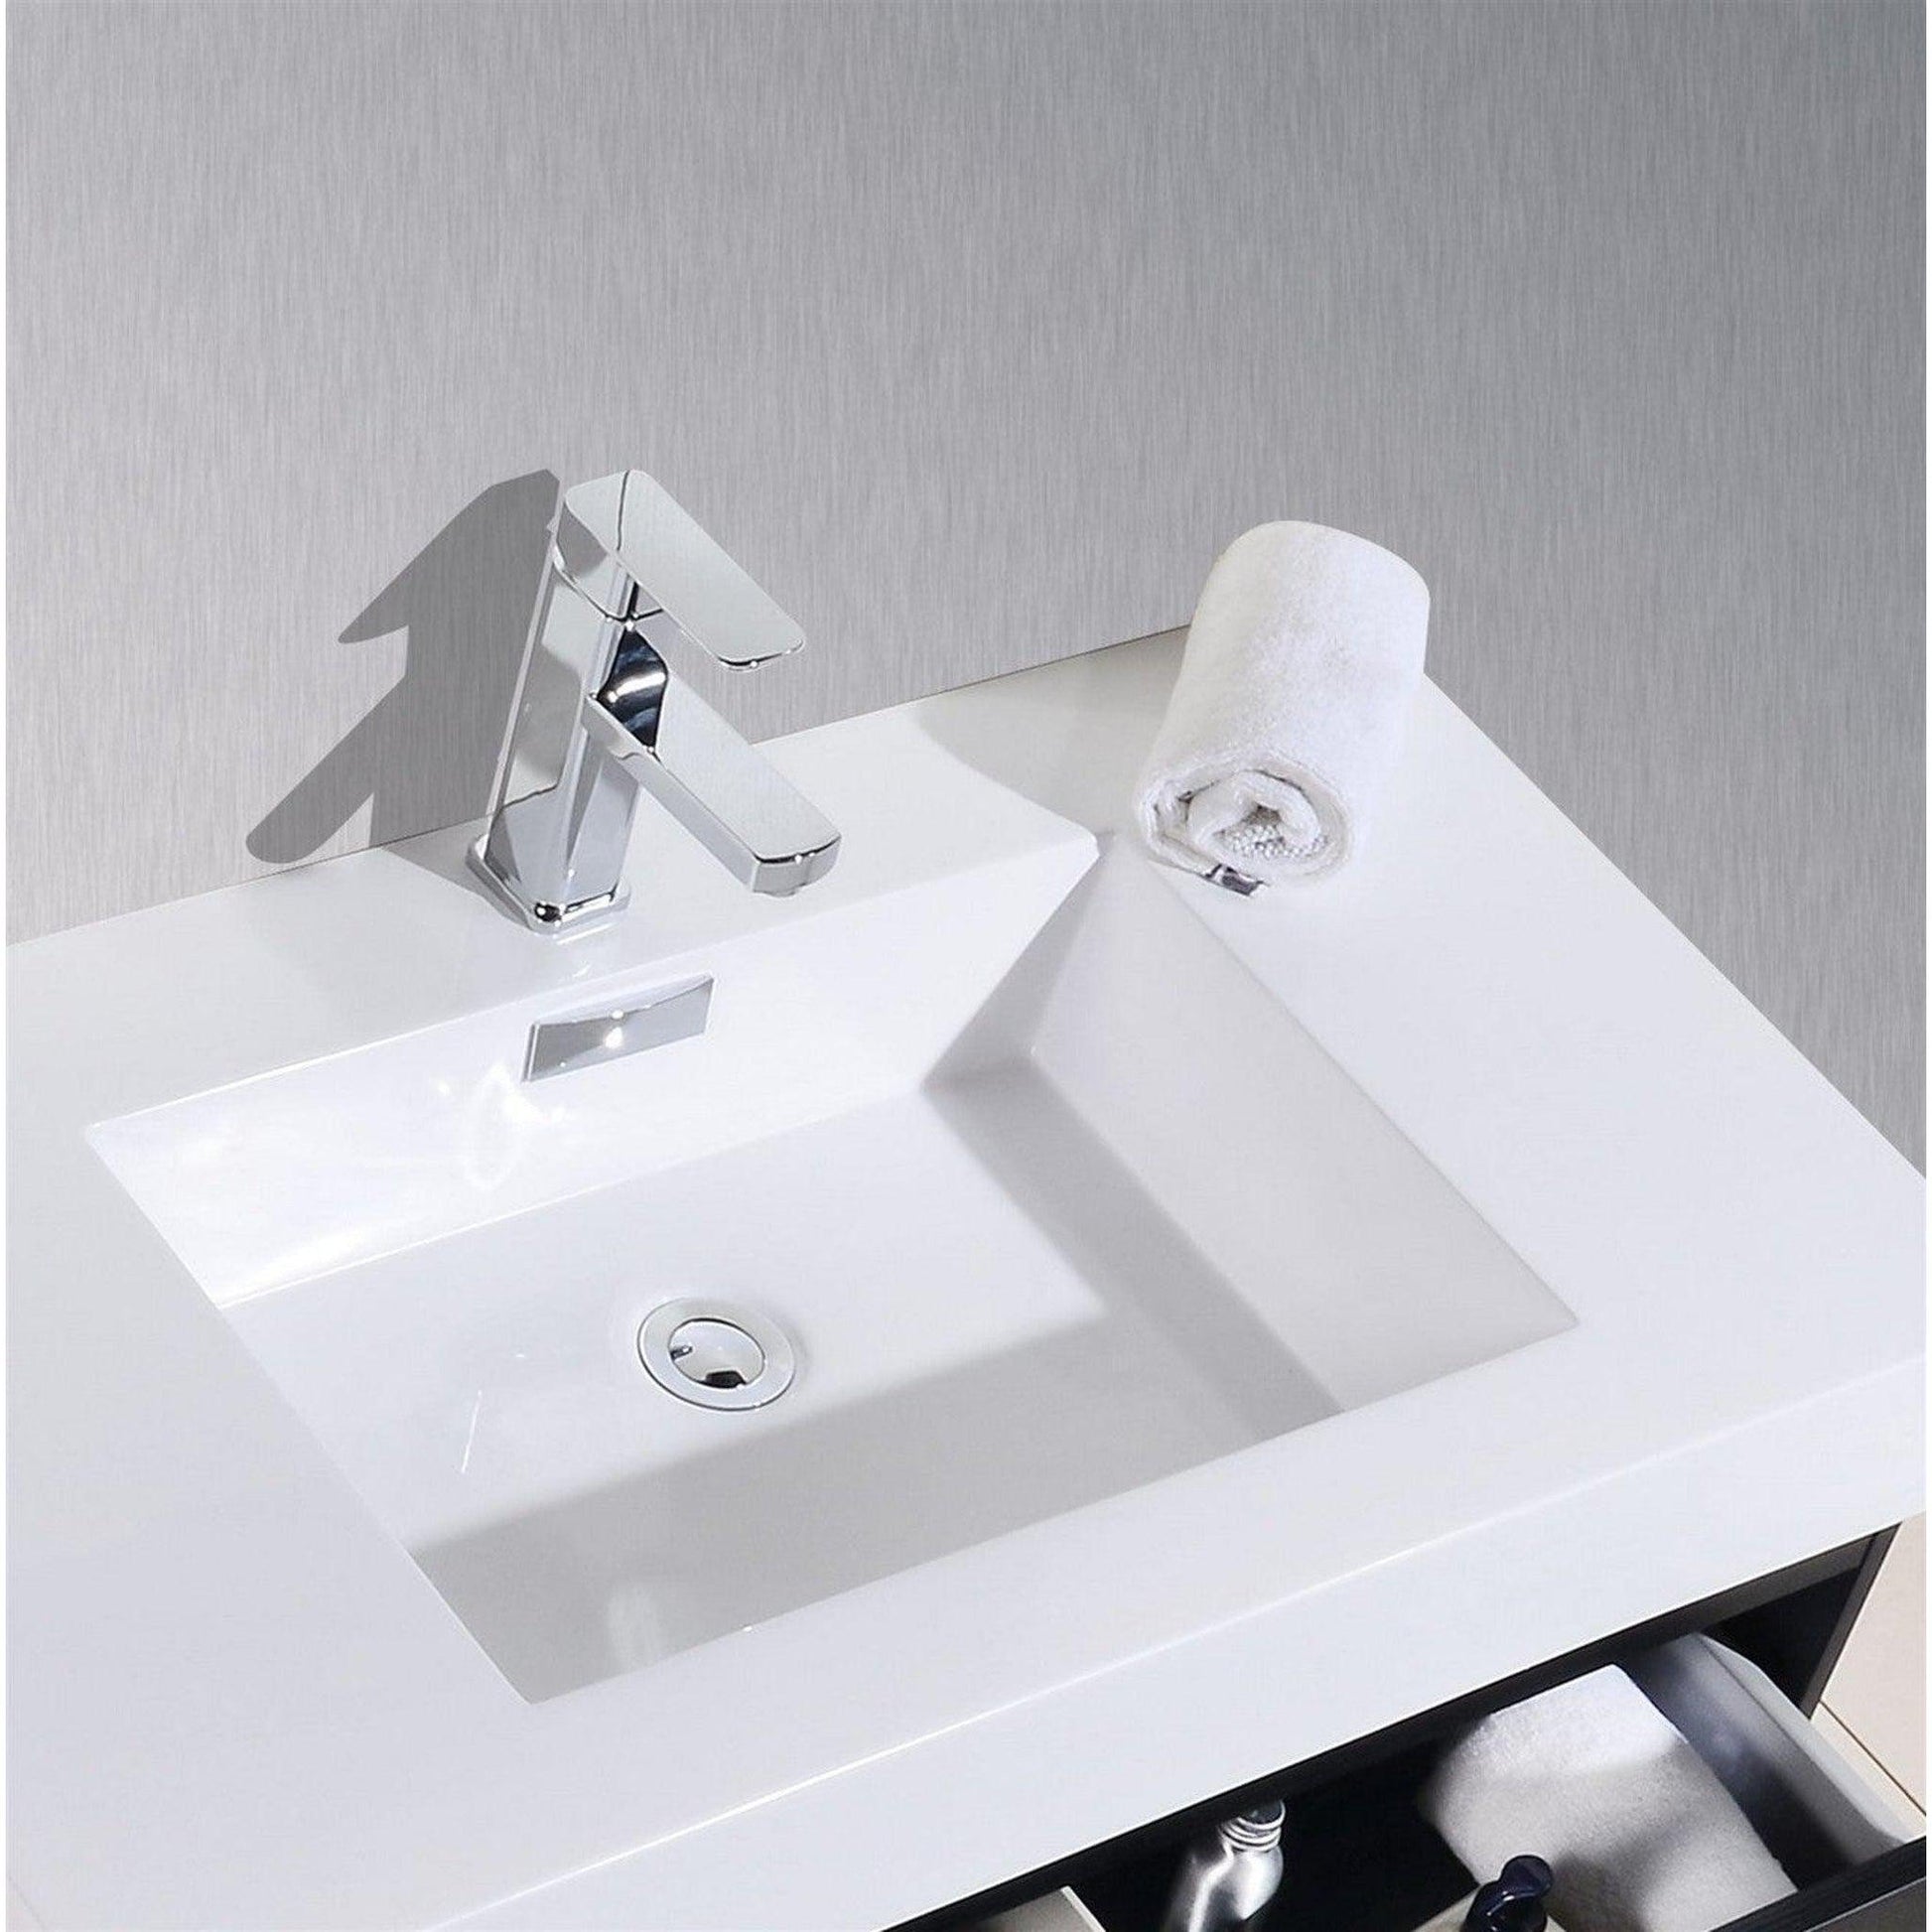 KubeBath Bliss 72" Black Wall-Mounted Modern Bathroom Vanity With Double Integrated Acrylic Sink With Overflow